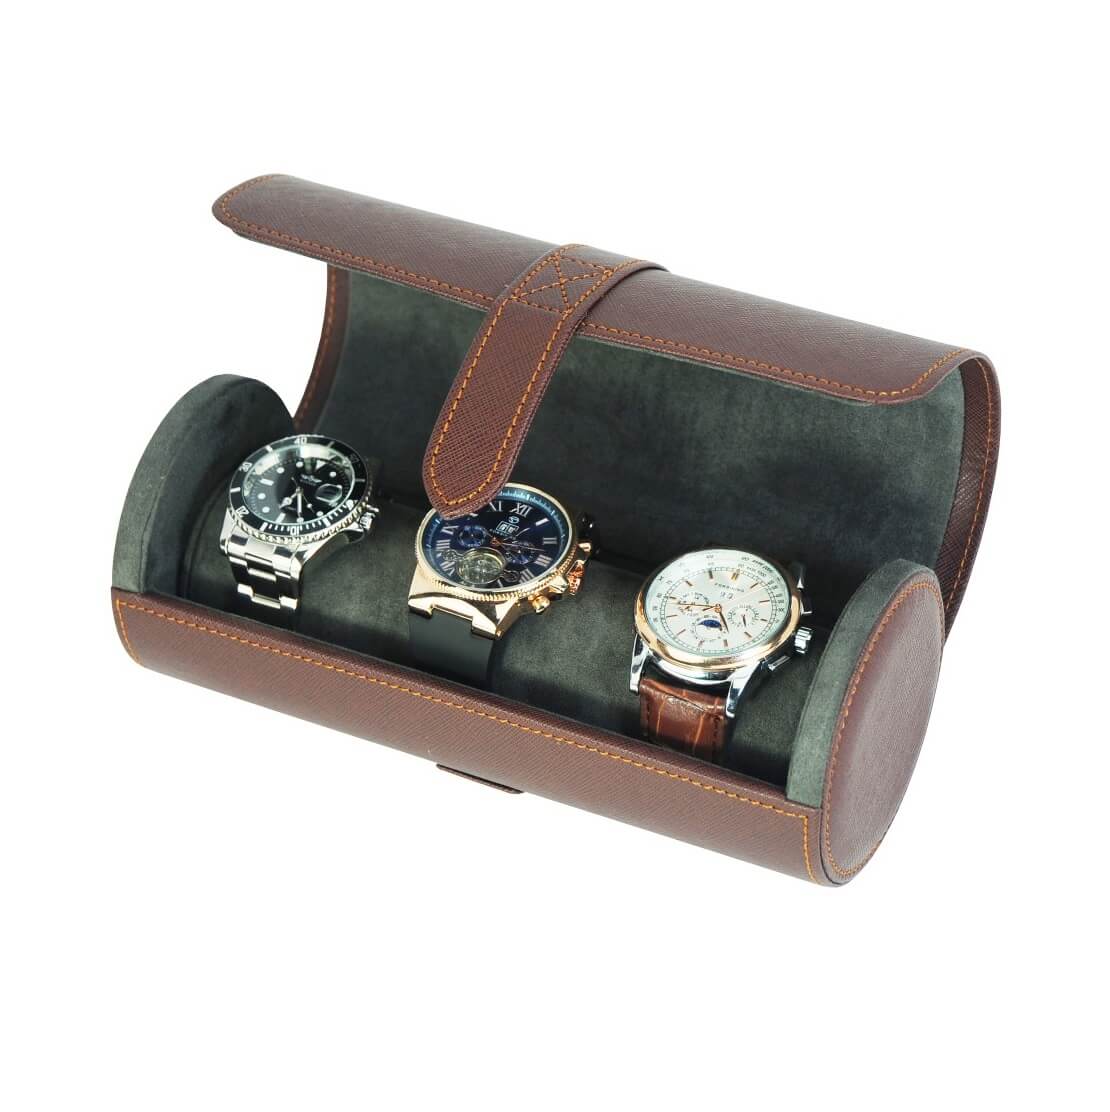 Leather travel watch case dark brown for 3 watches